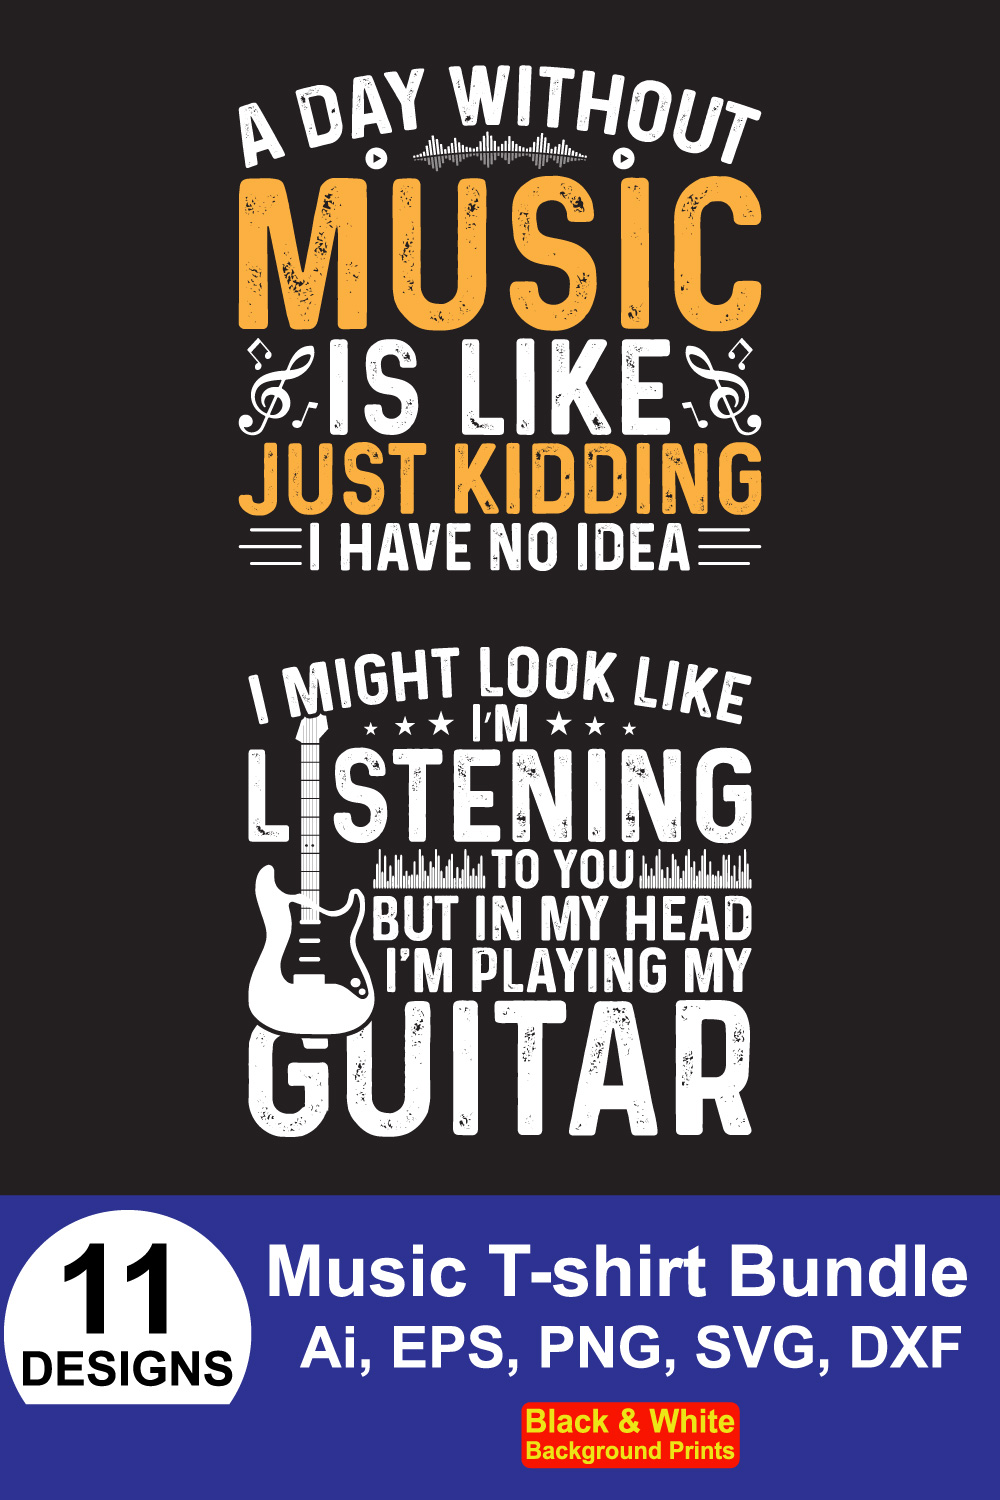 Dj Music Motivational T-shirt Design Pinterest image.